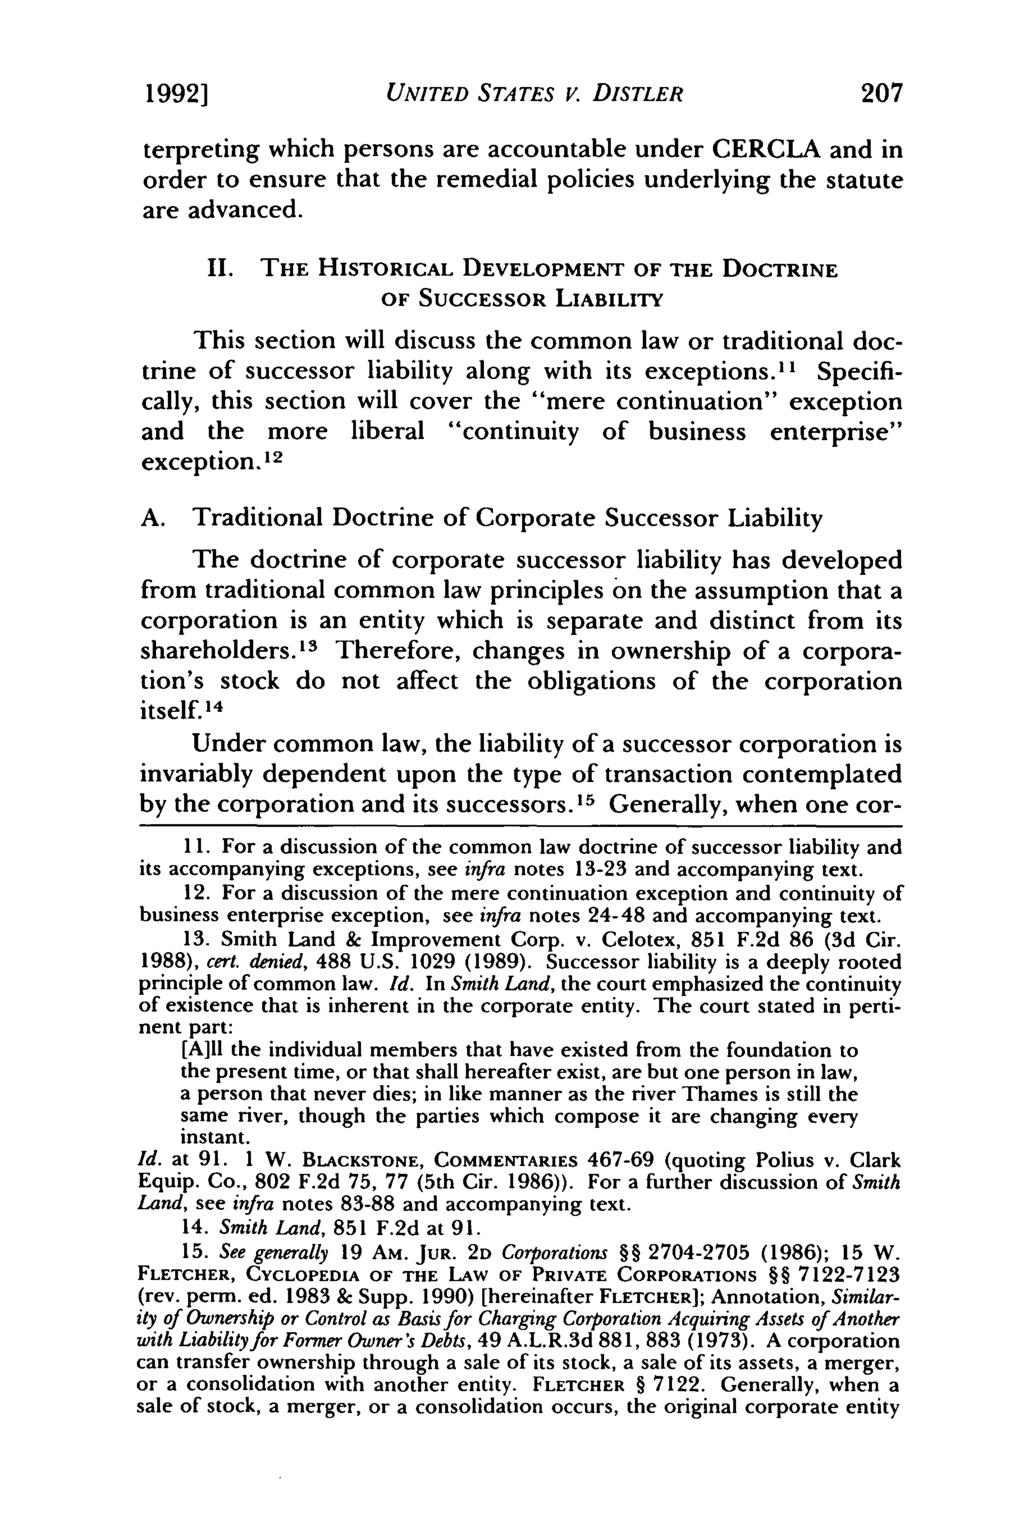 19921 Girard: An Expansion of Corporate Successor Liability Under CERCLA: Unite UNITED STATES V.